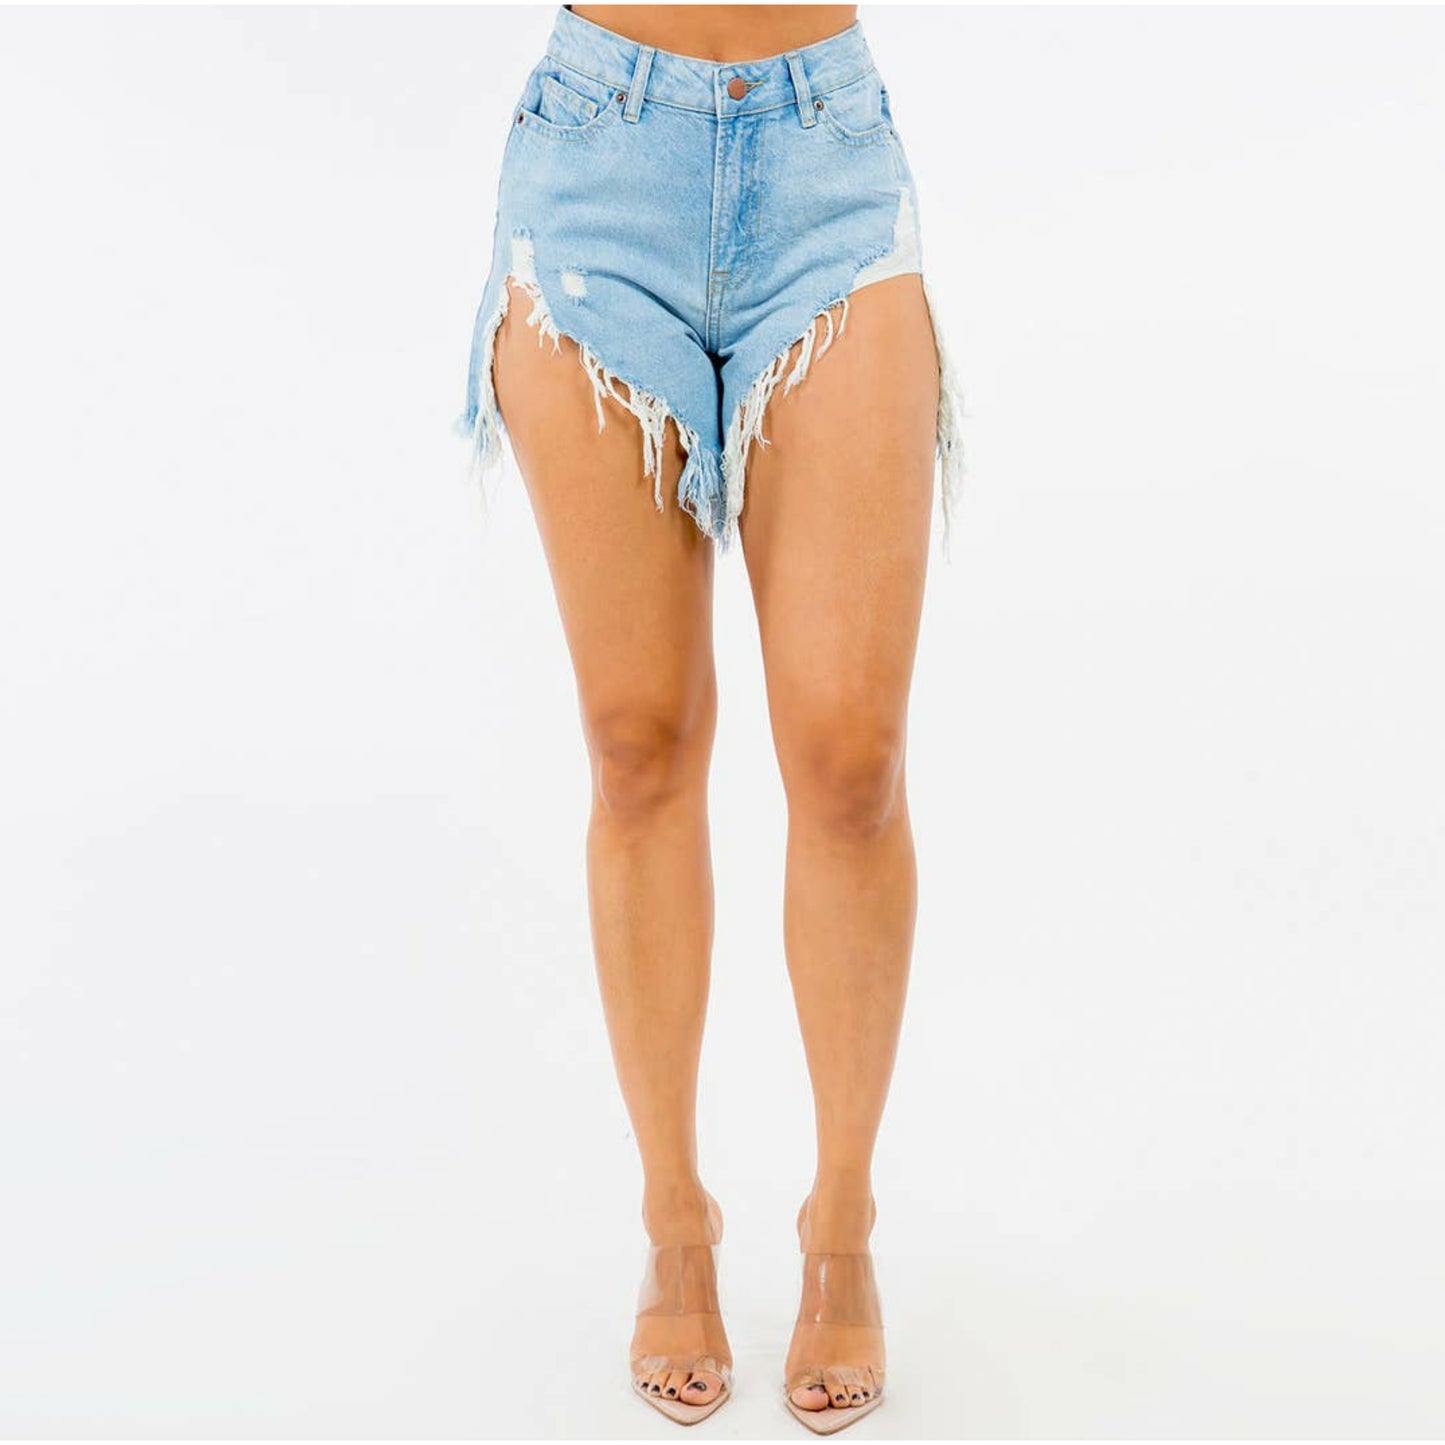 Malibu Shorts